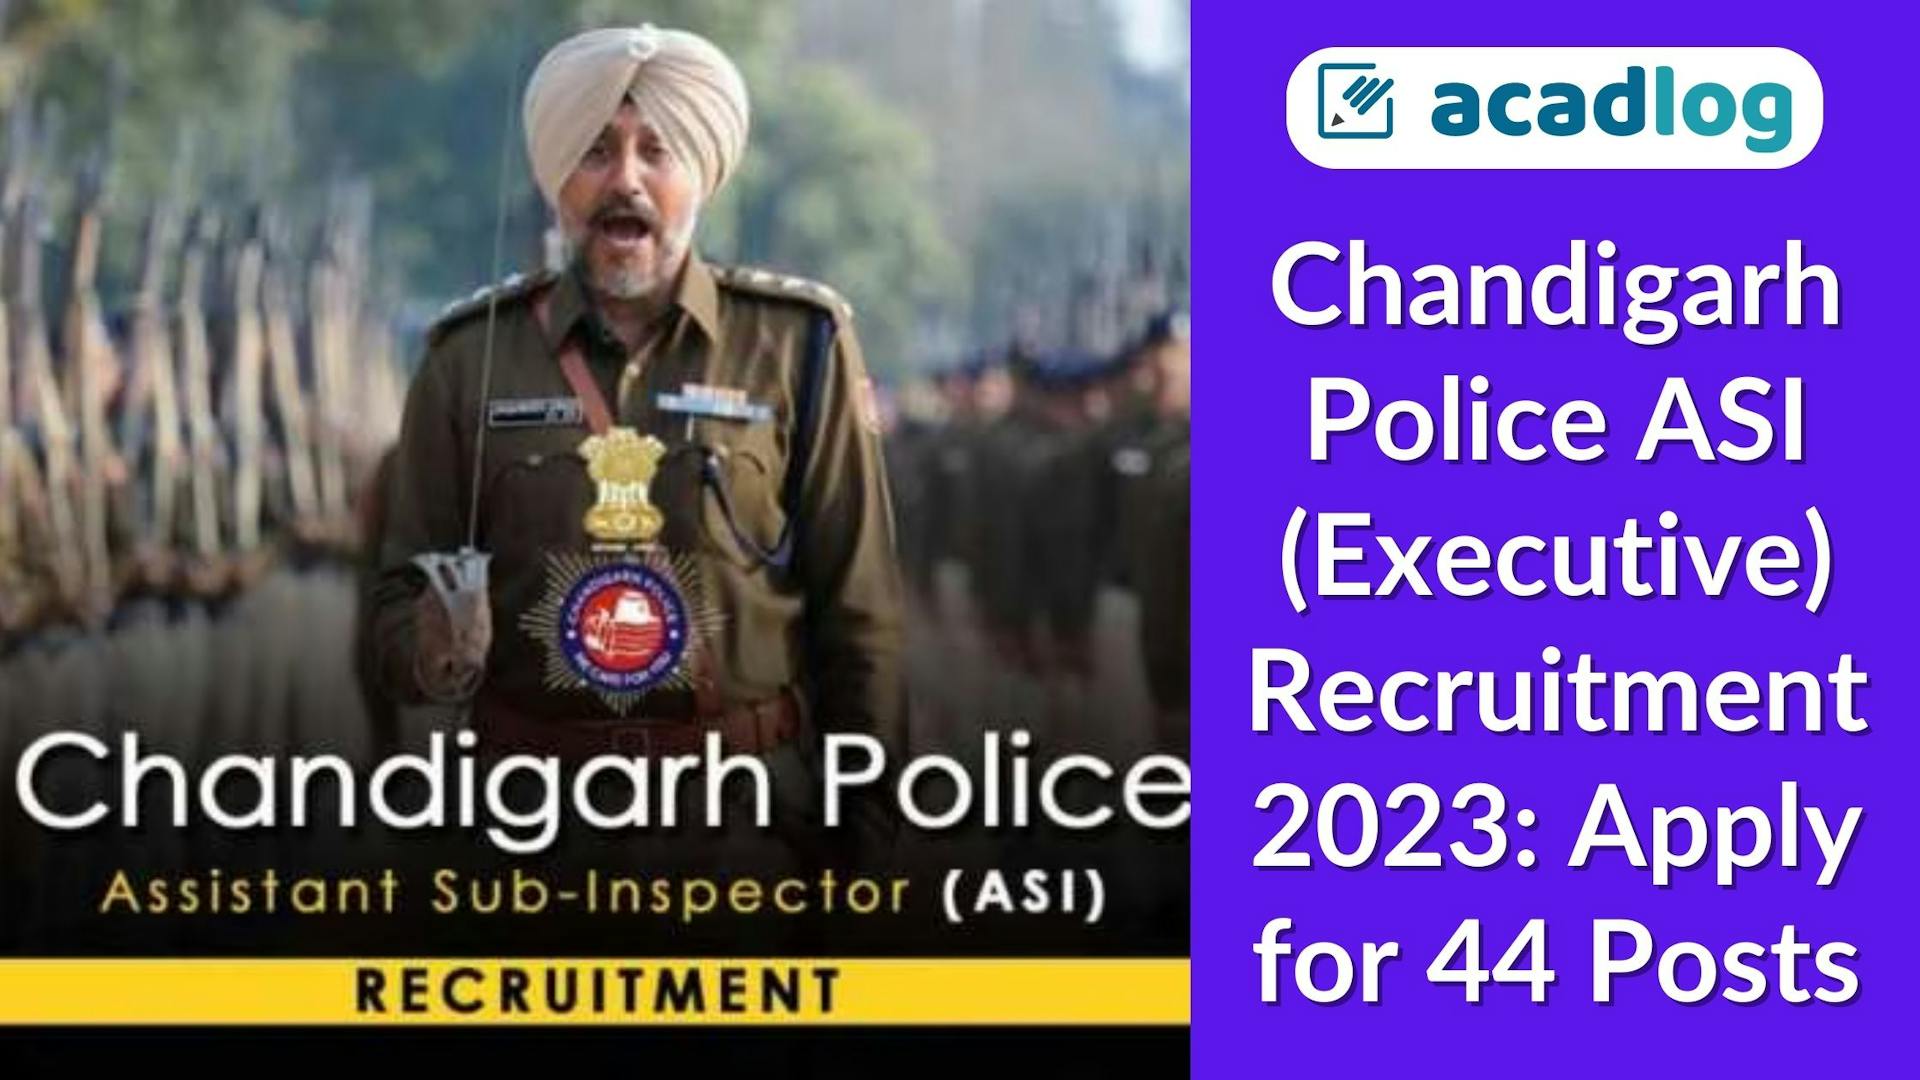 Chandigarh Police Jobs: ASI (Executive) Recruitment 2023 for 44 Vacancies